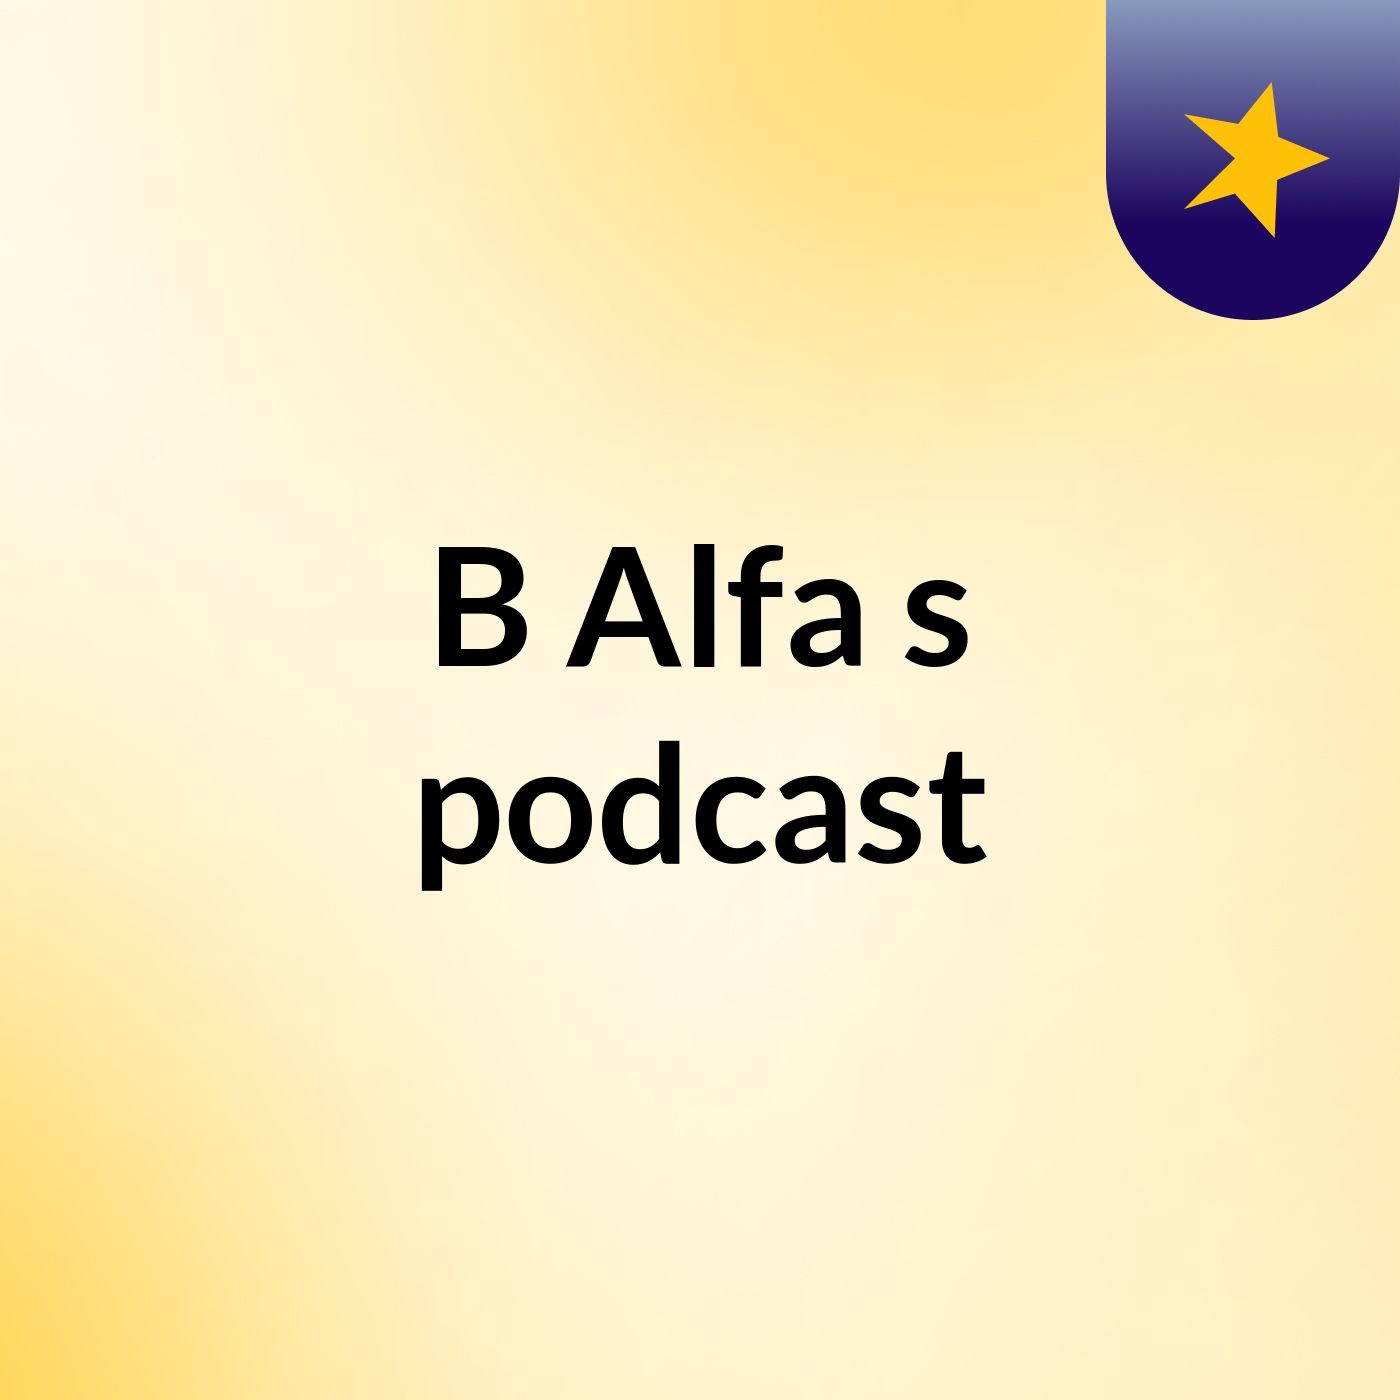 B Alfa's podcast